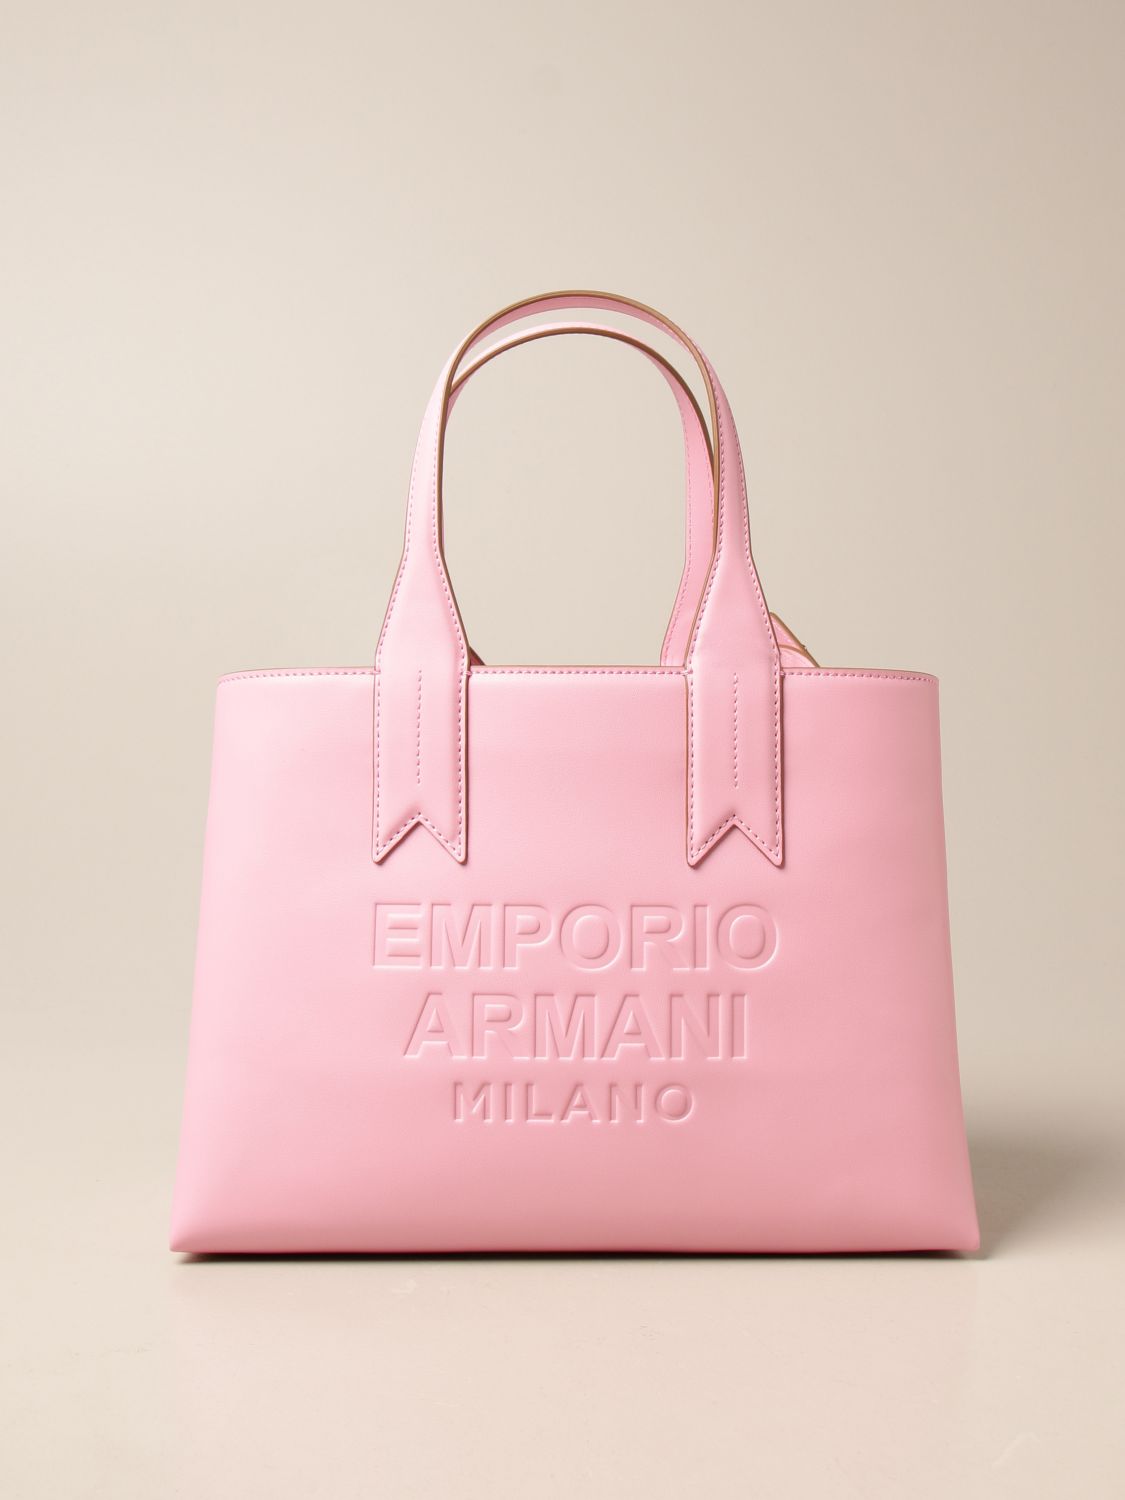 Buy > giorgio armani handbags > in stock